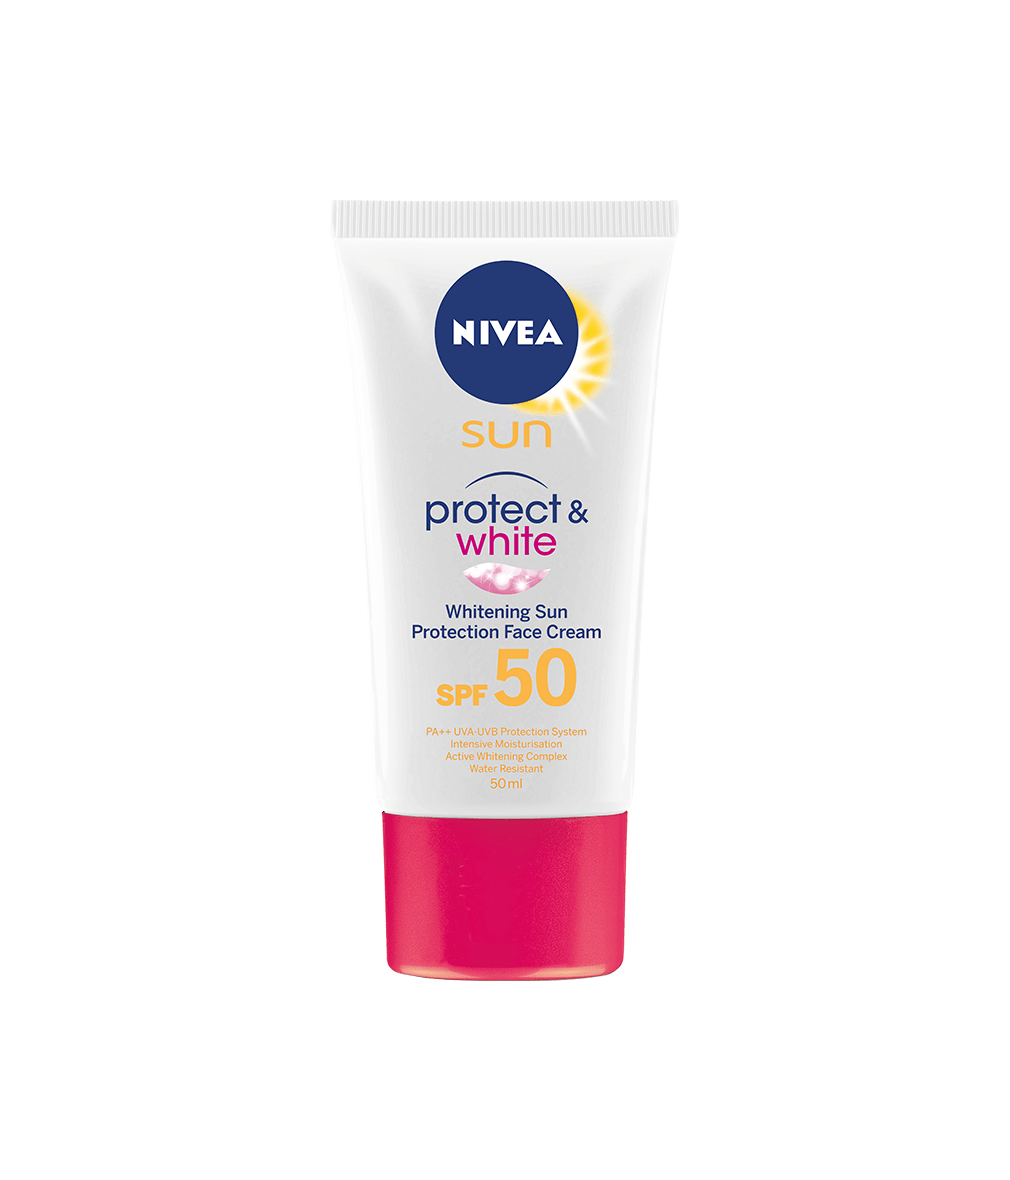 best factor 50 sun cream for face